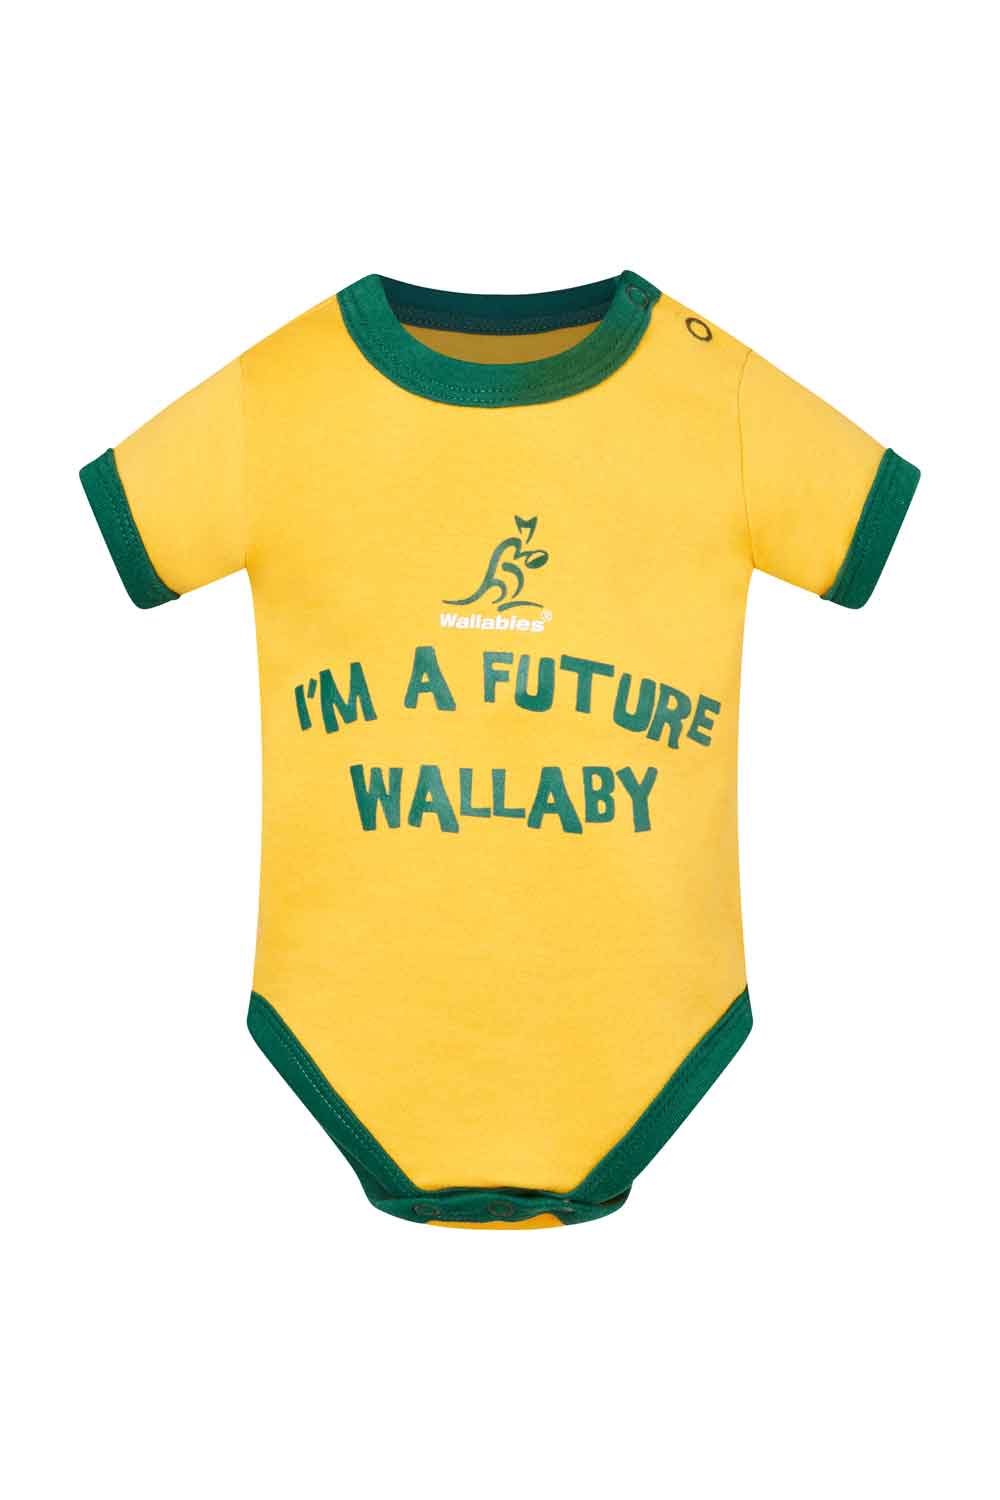 baby wallabies jersey